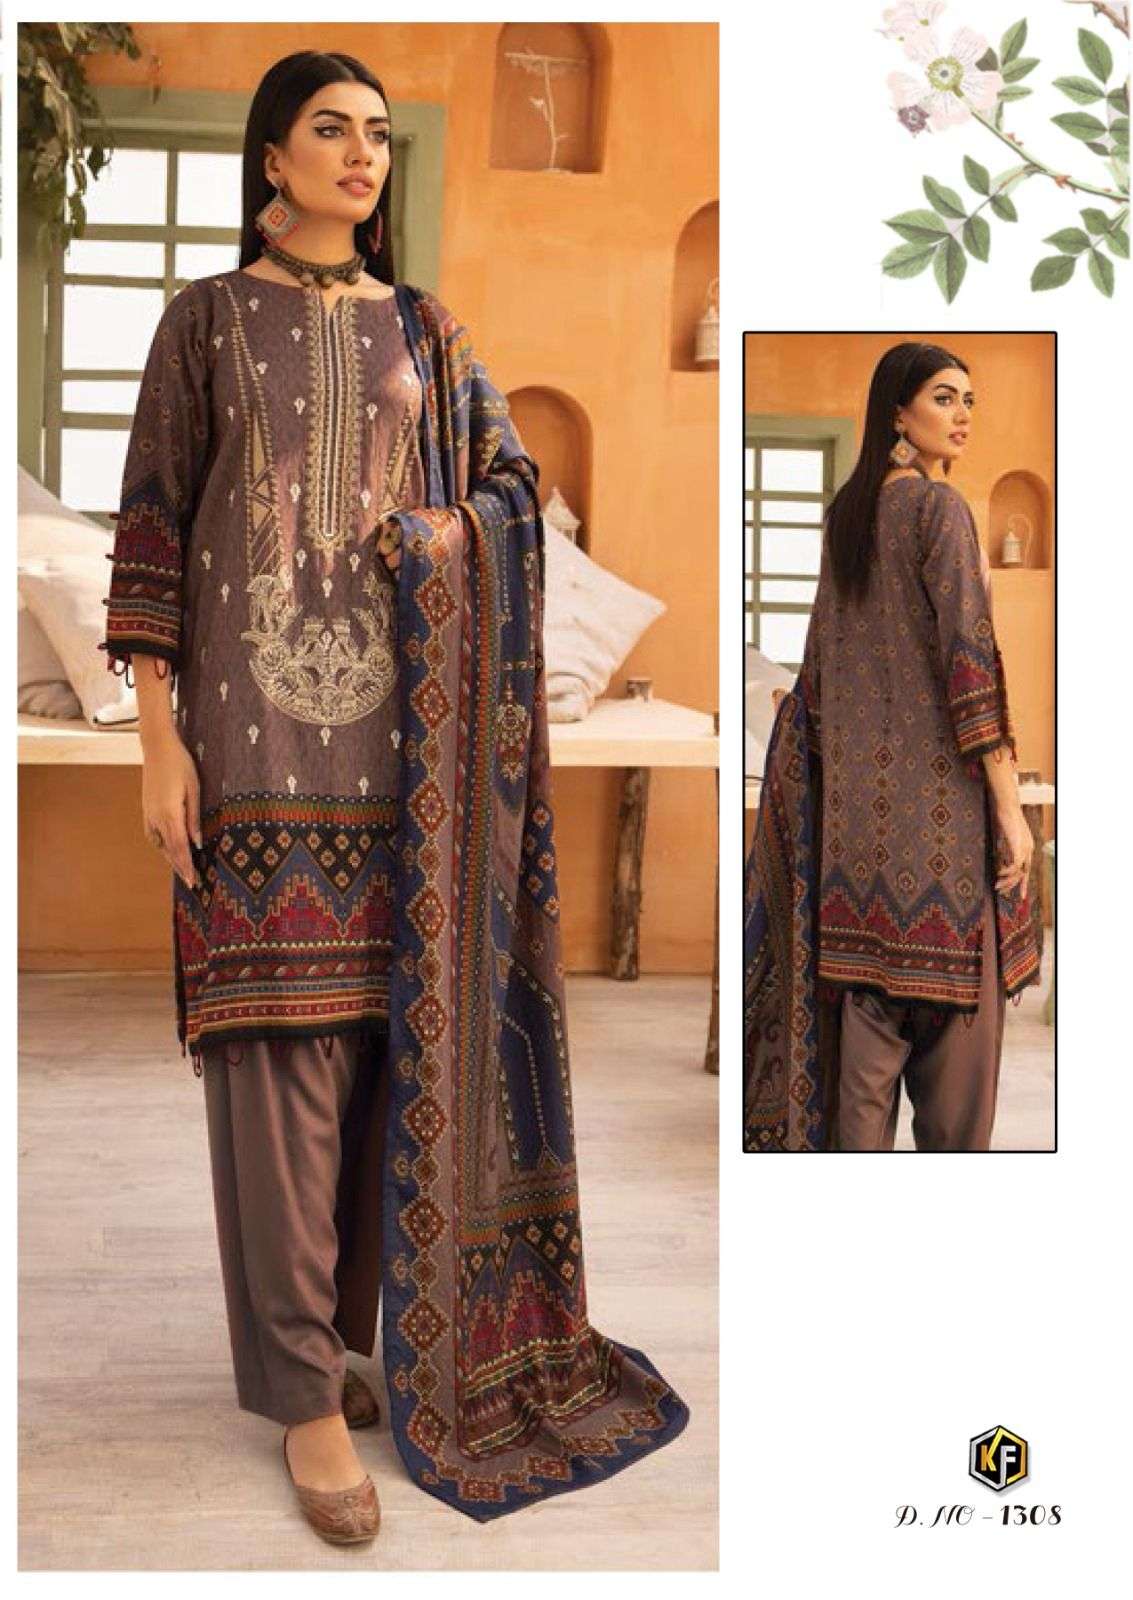 keval fab rangrez vol-3 1301-1310 series designer fancy party wear salwar kameez set wholesaler surat